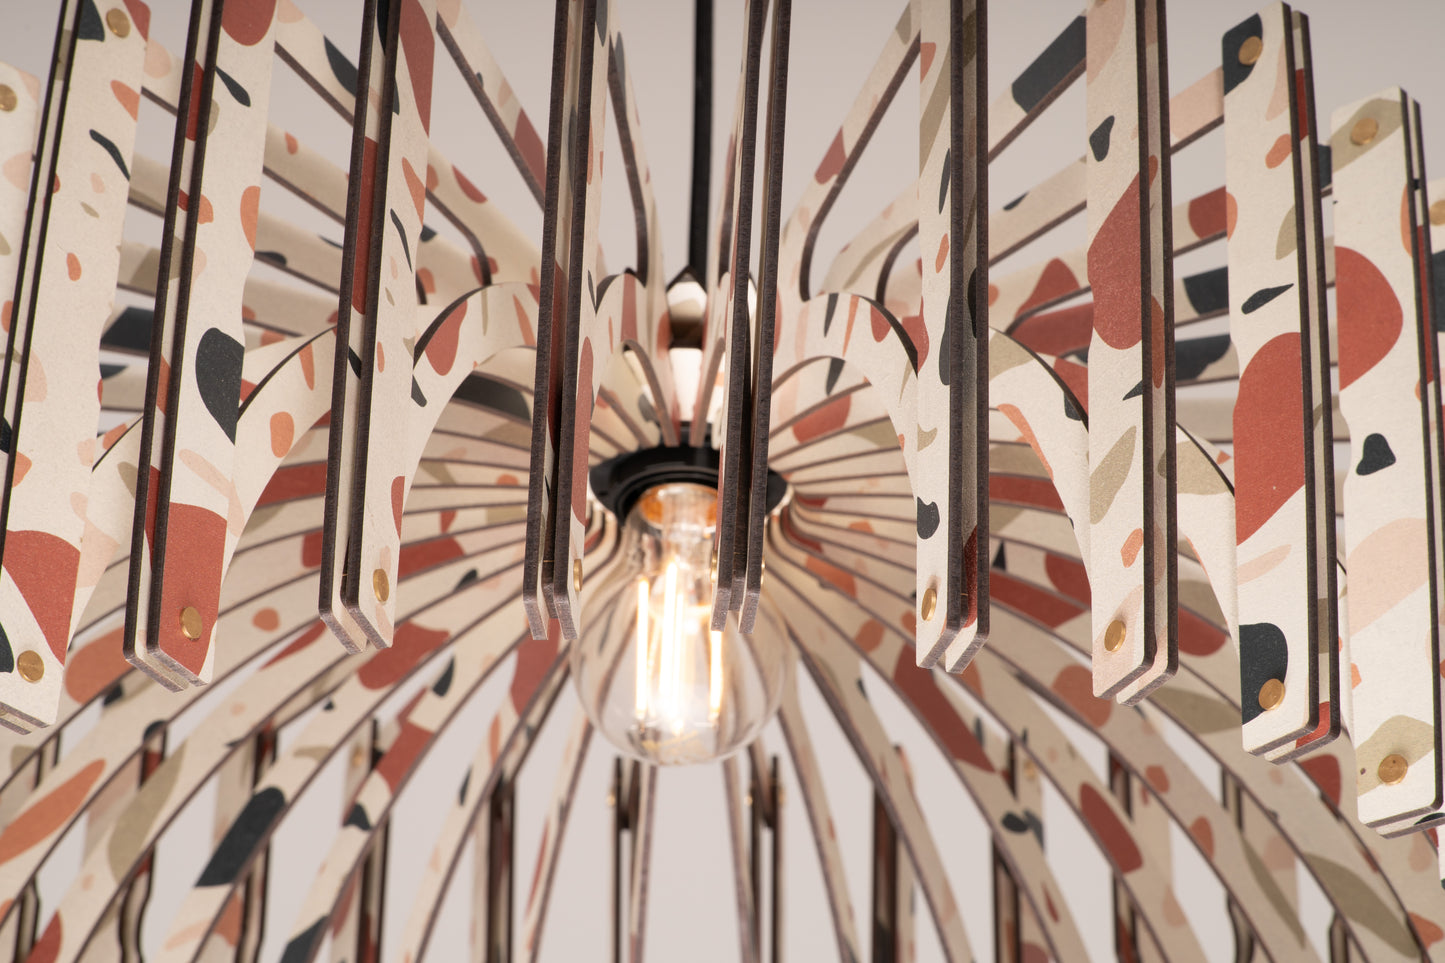 WHITE TERRACO Umbrella| Wood Pendant Light| Pattern Light Fixture | Mid Century Modern | Handmade Lamp | Ceiling Lamp | Chandelier Lighting